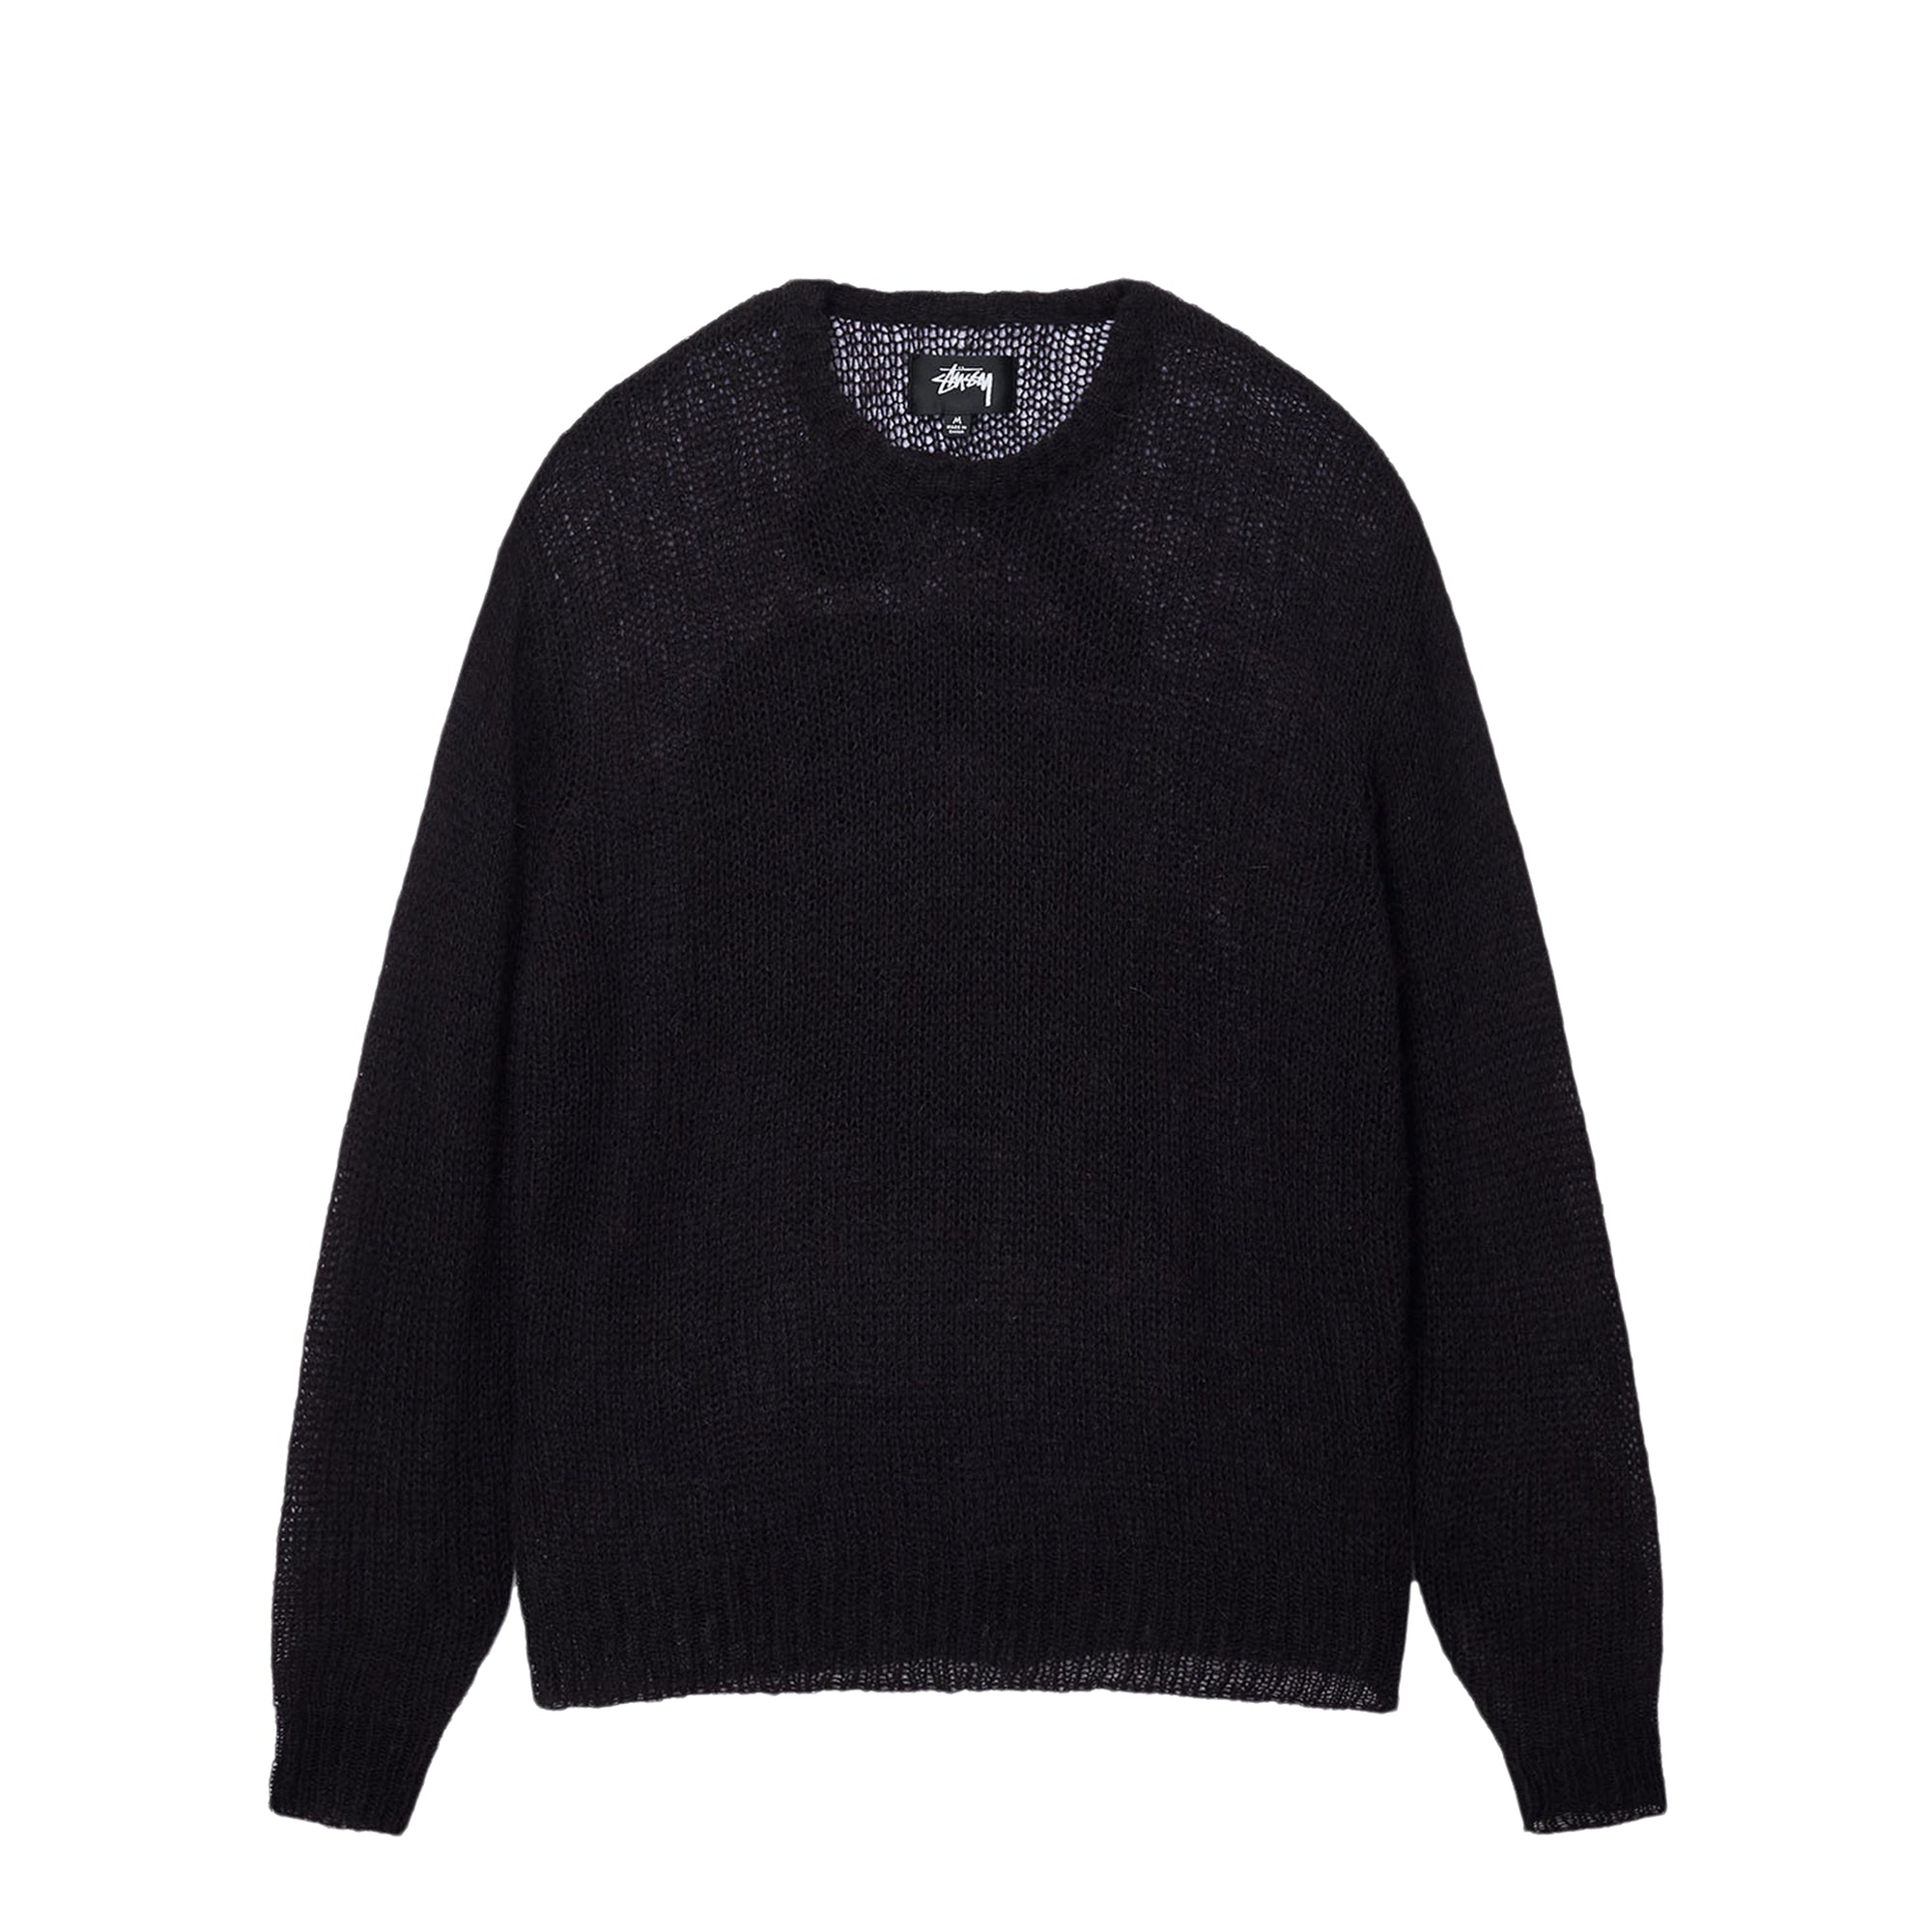 Stüssy - Men's S Loose Knit Sweater - (Black) view 1